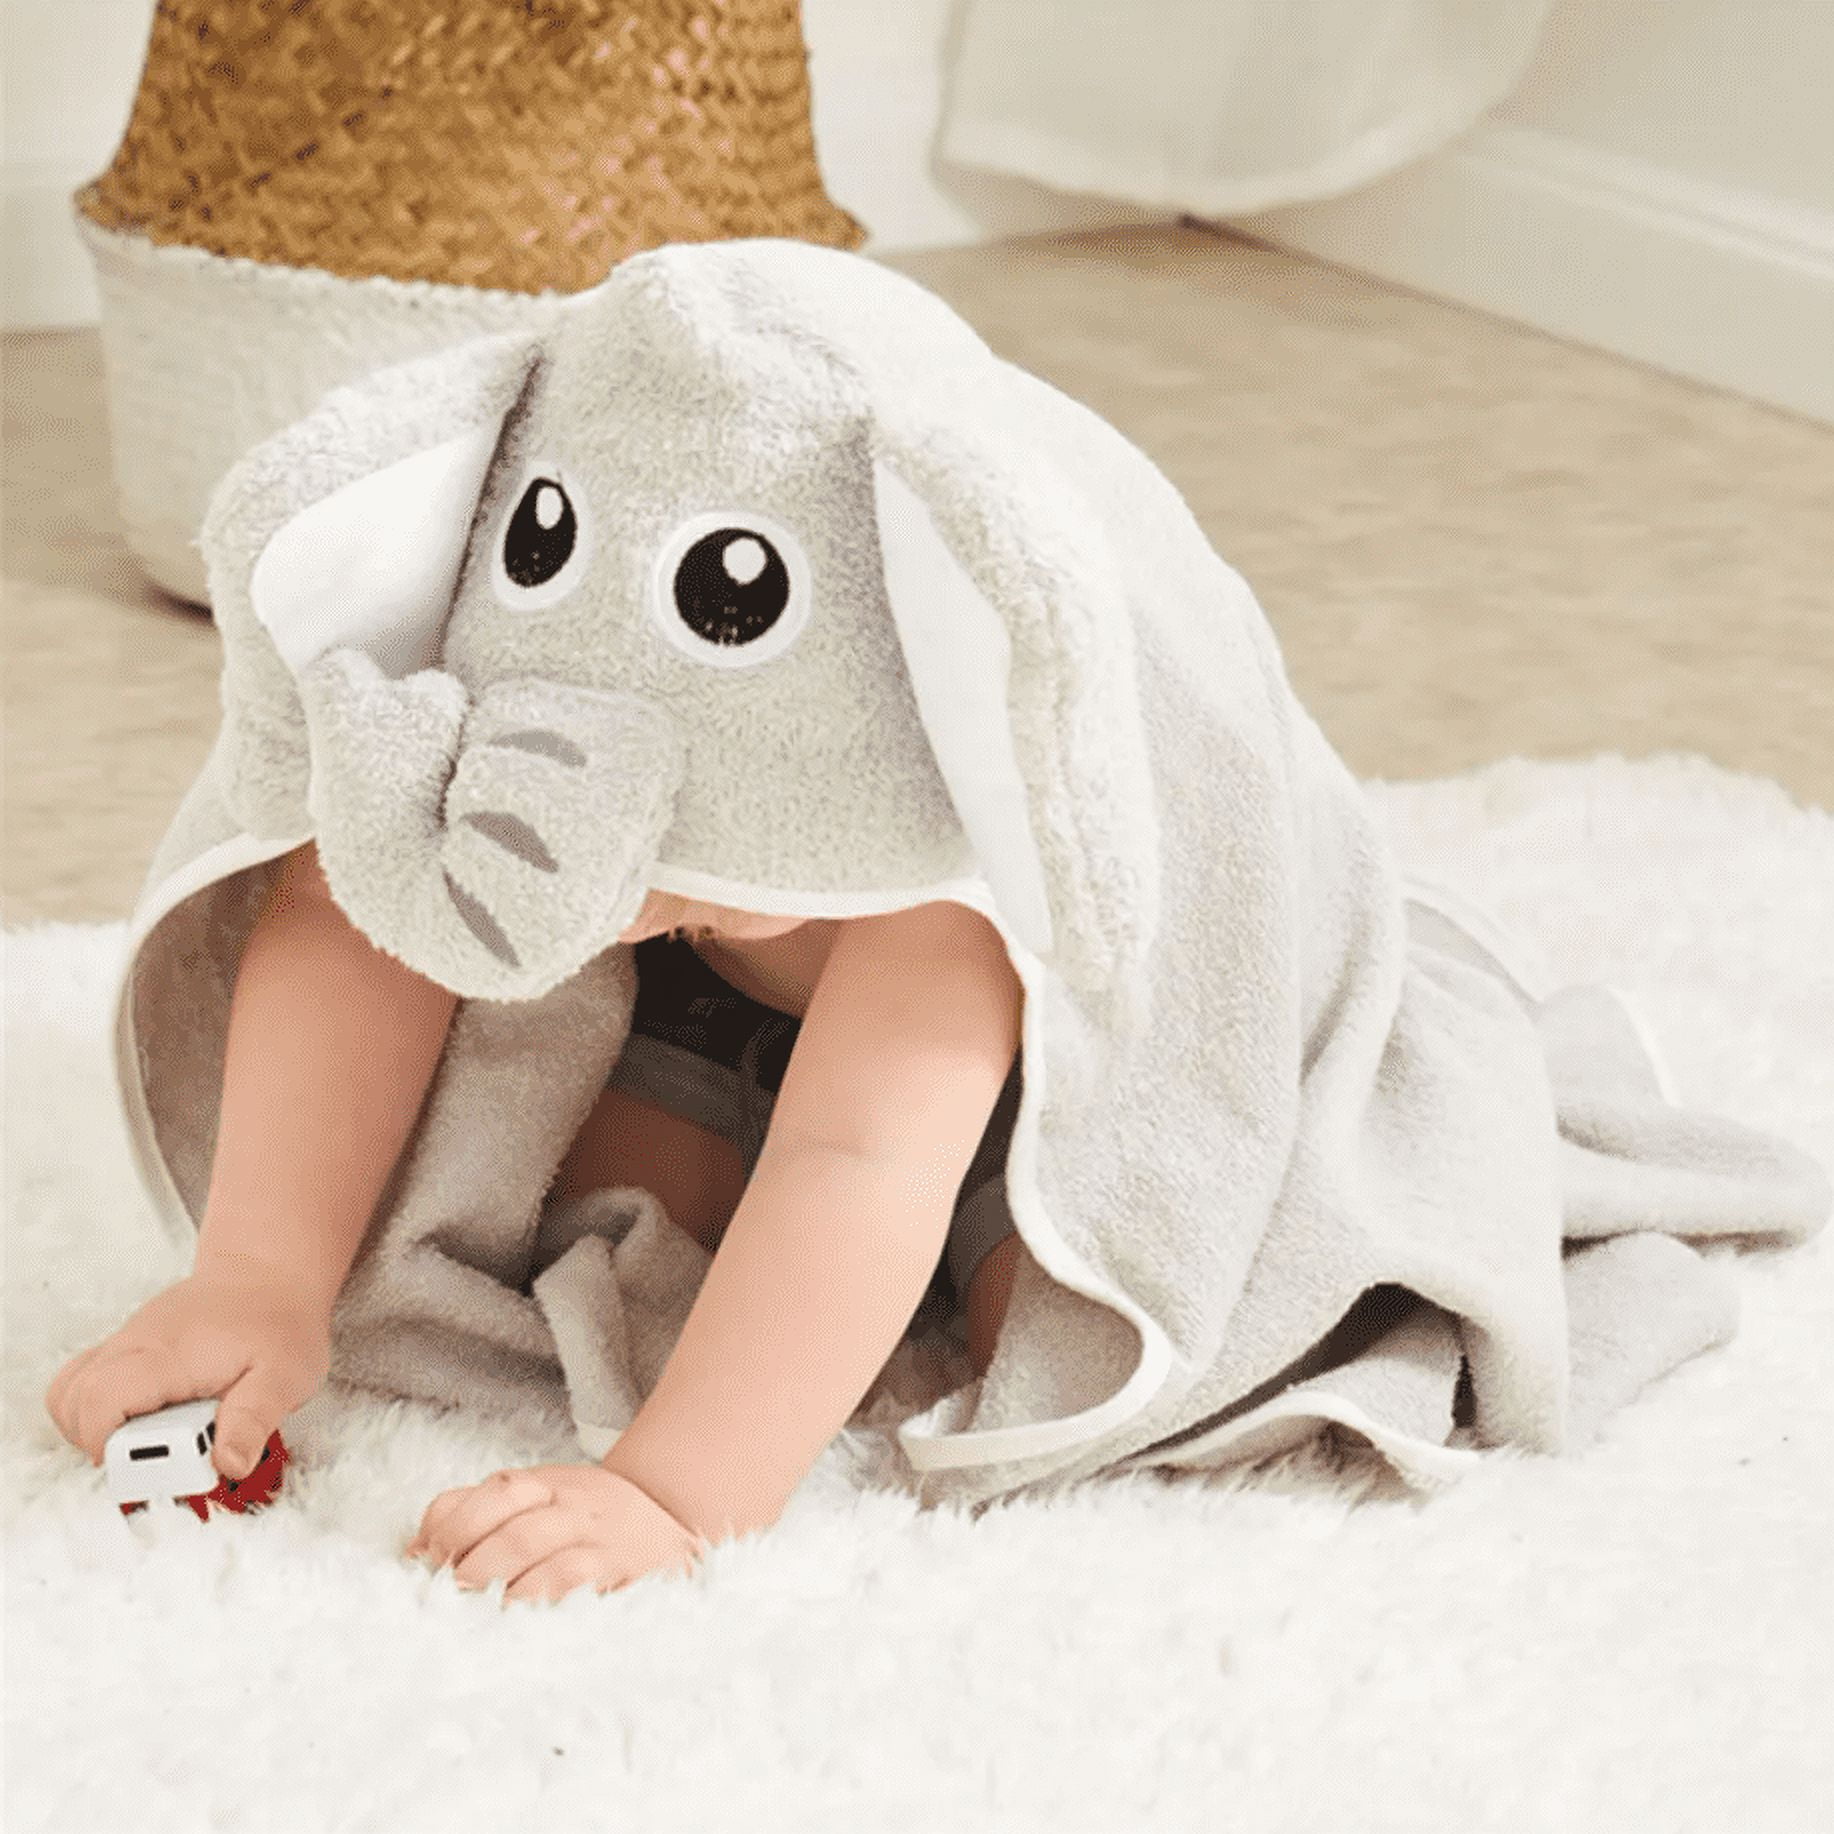  Supi Familia Baby Hooded Towel – Extra Large 45 x 35